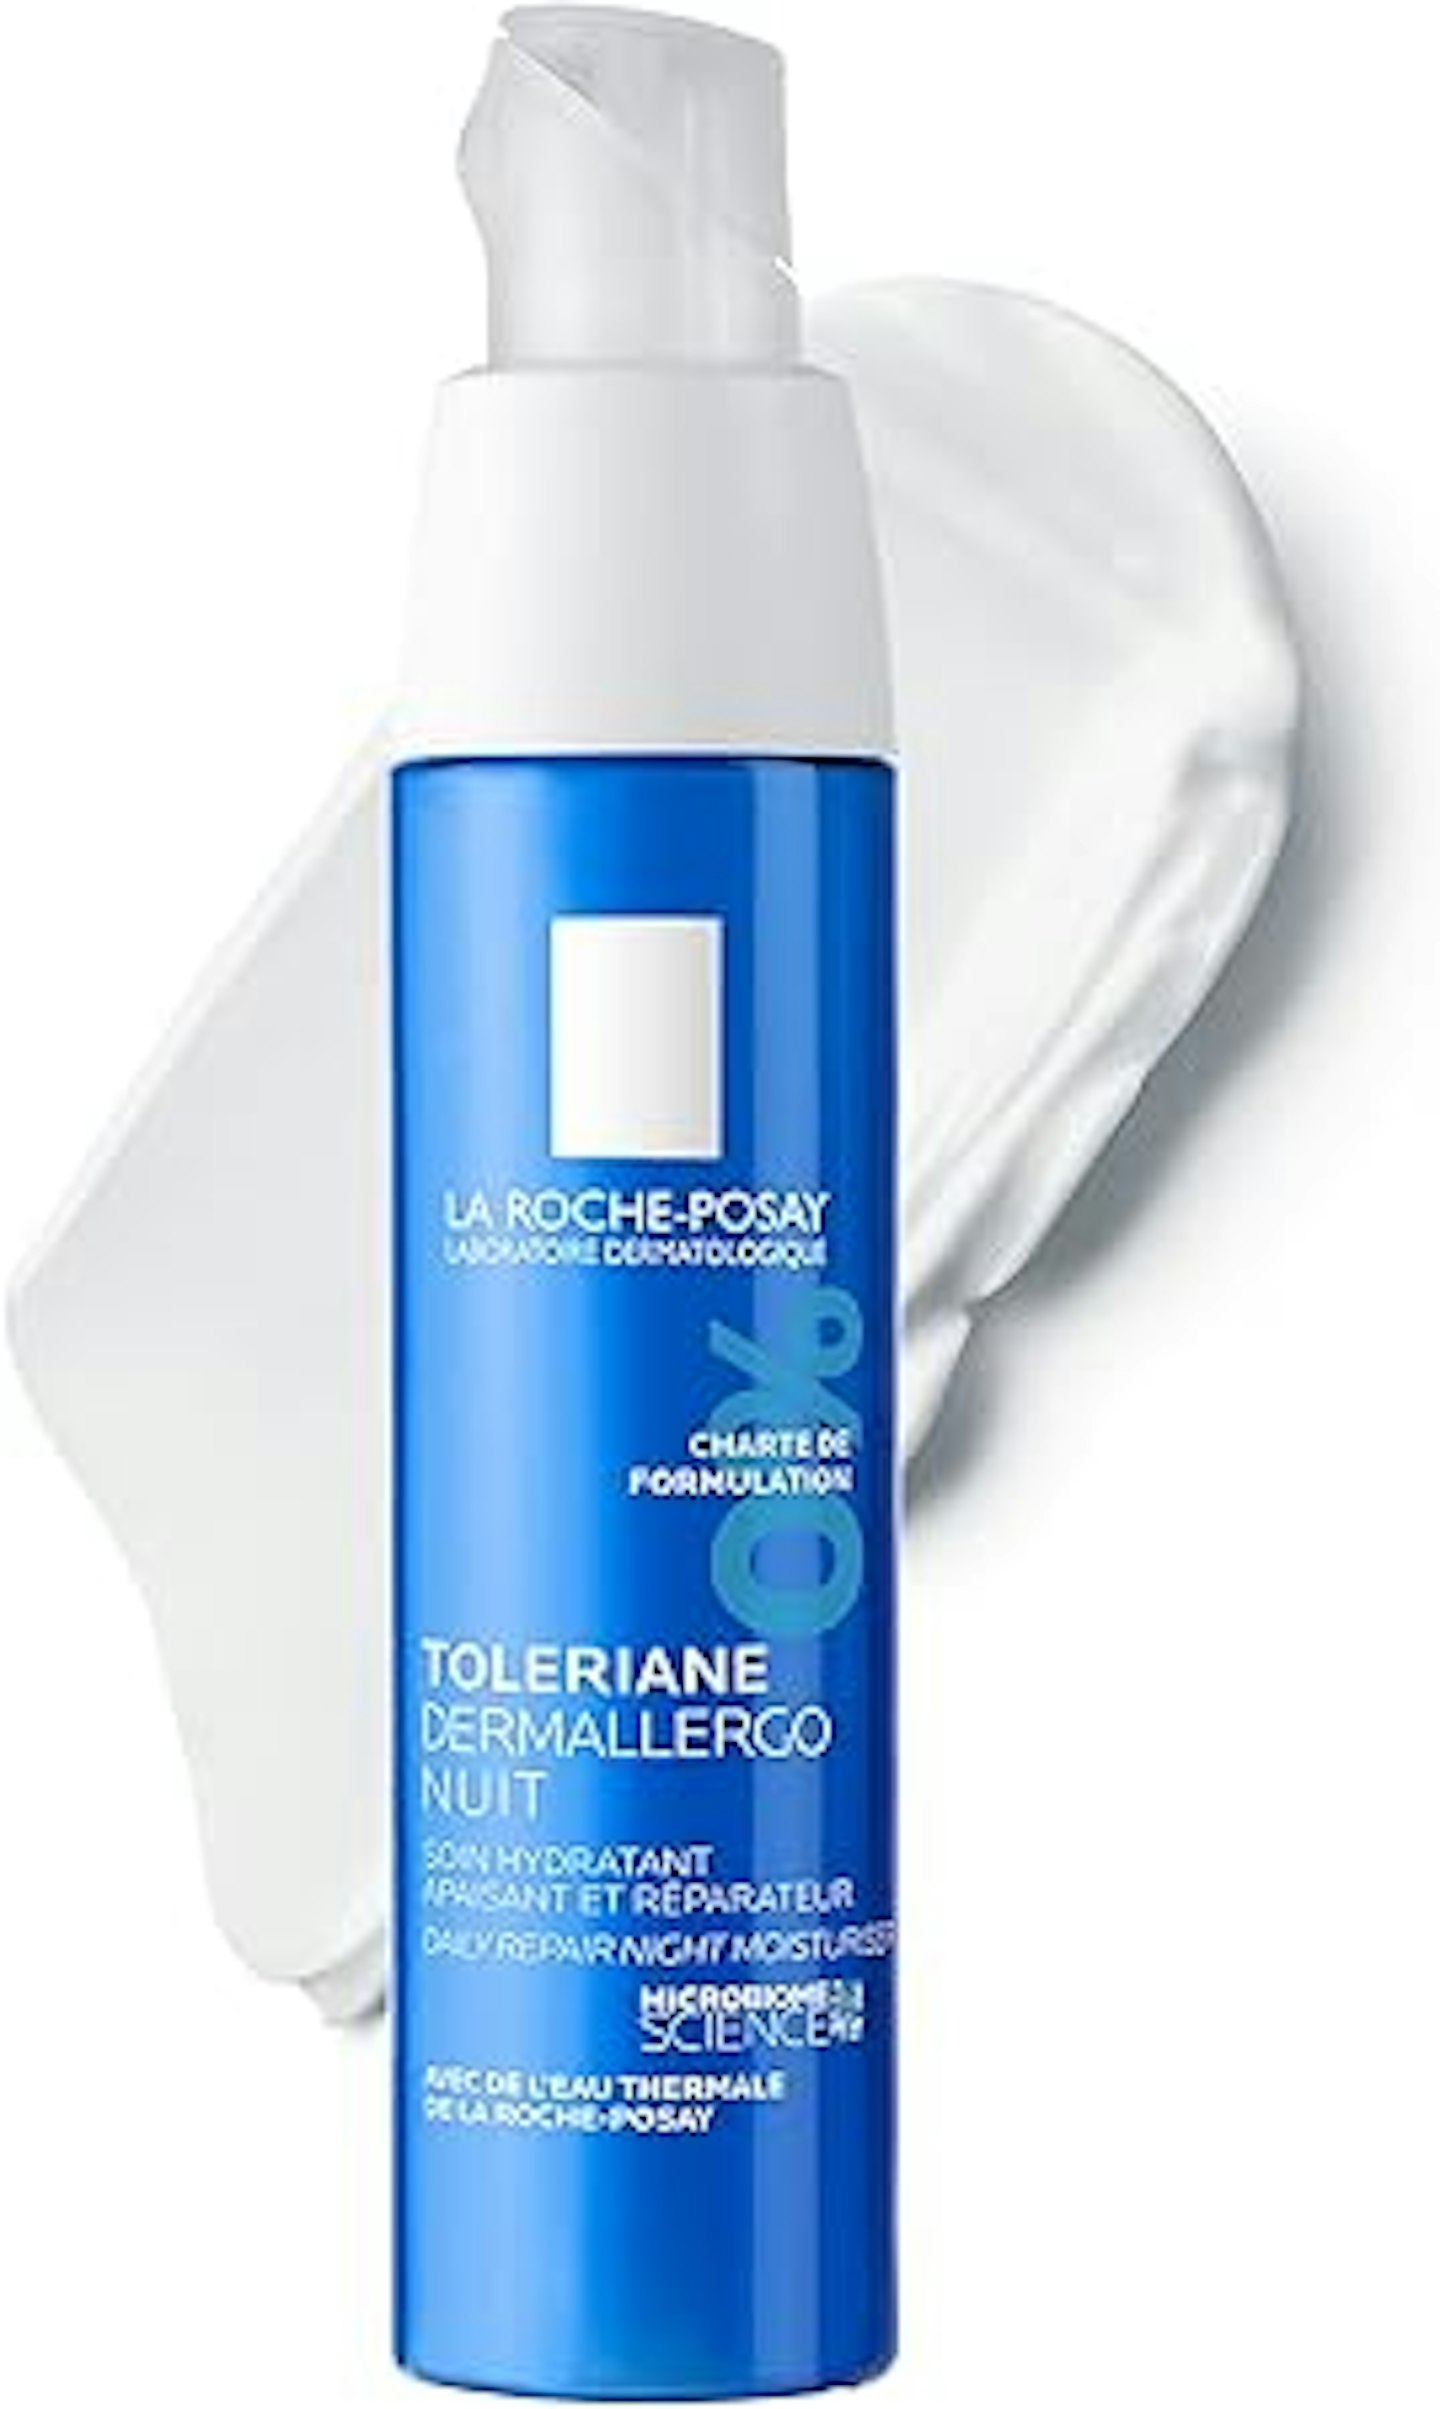 La Roche-Posay Toleriane Dermallergo Soothing Night Cream